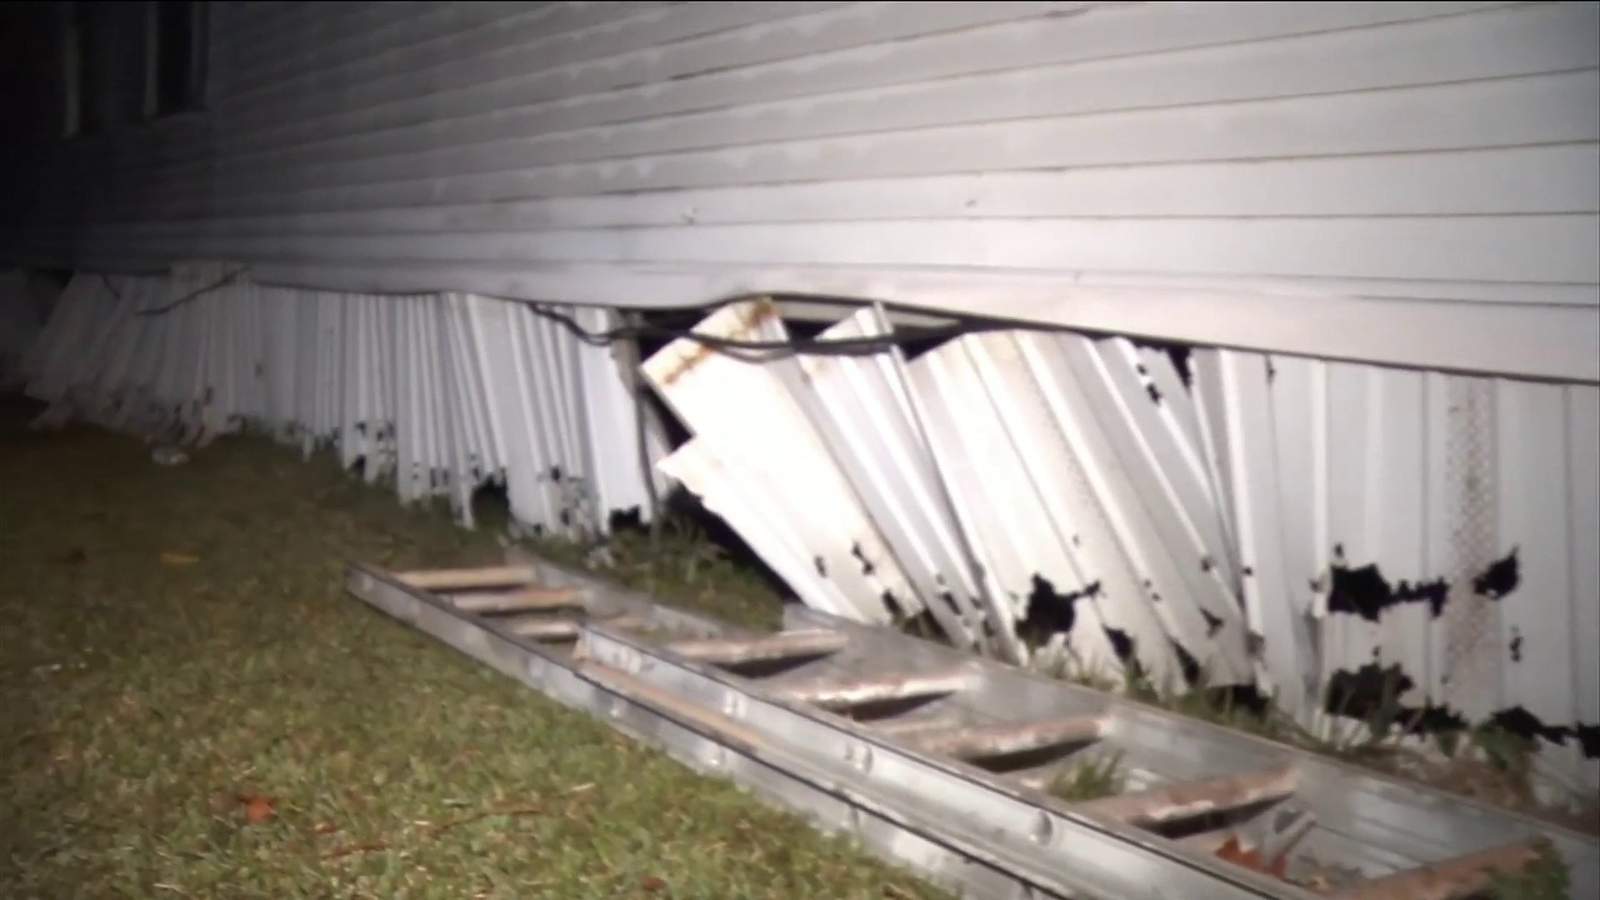 Tornado damaged homes, injured 2 in Starke on Christmas Eve